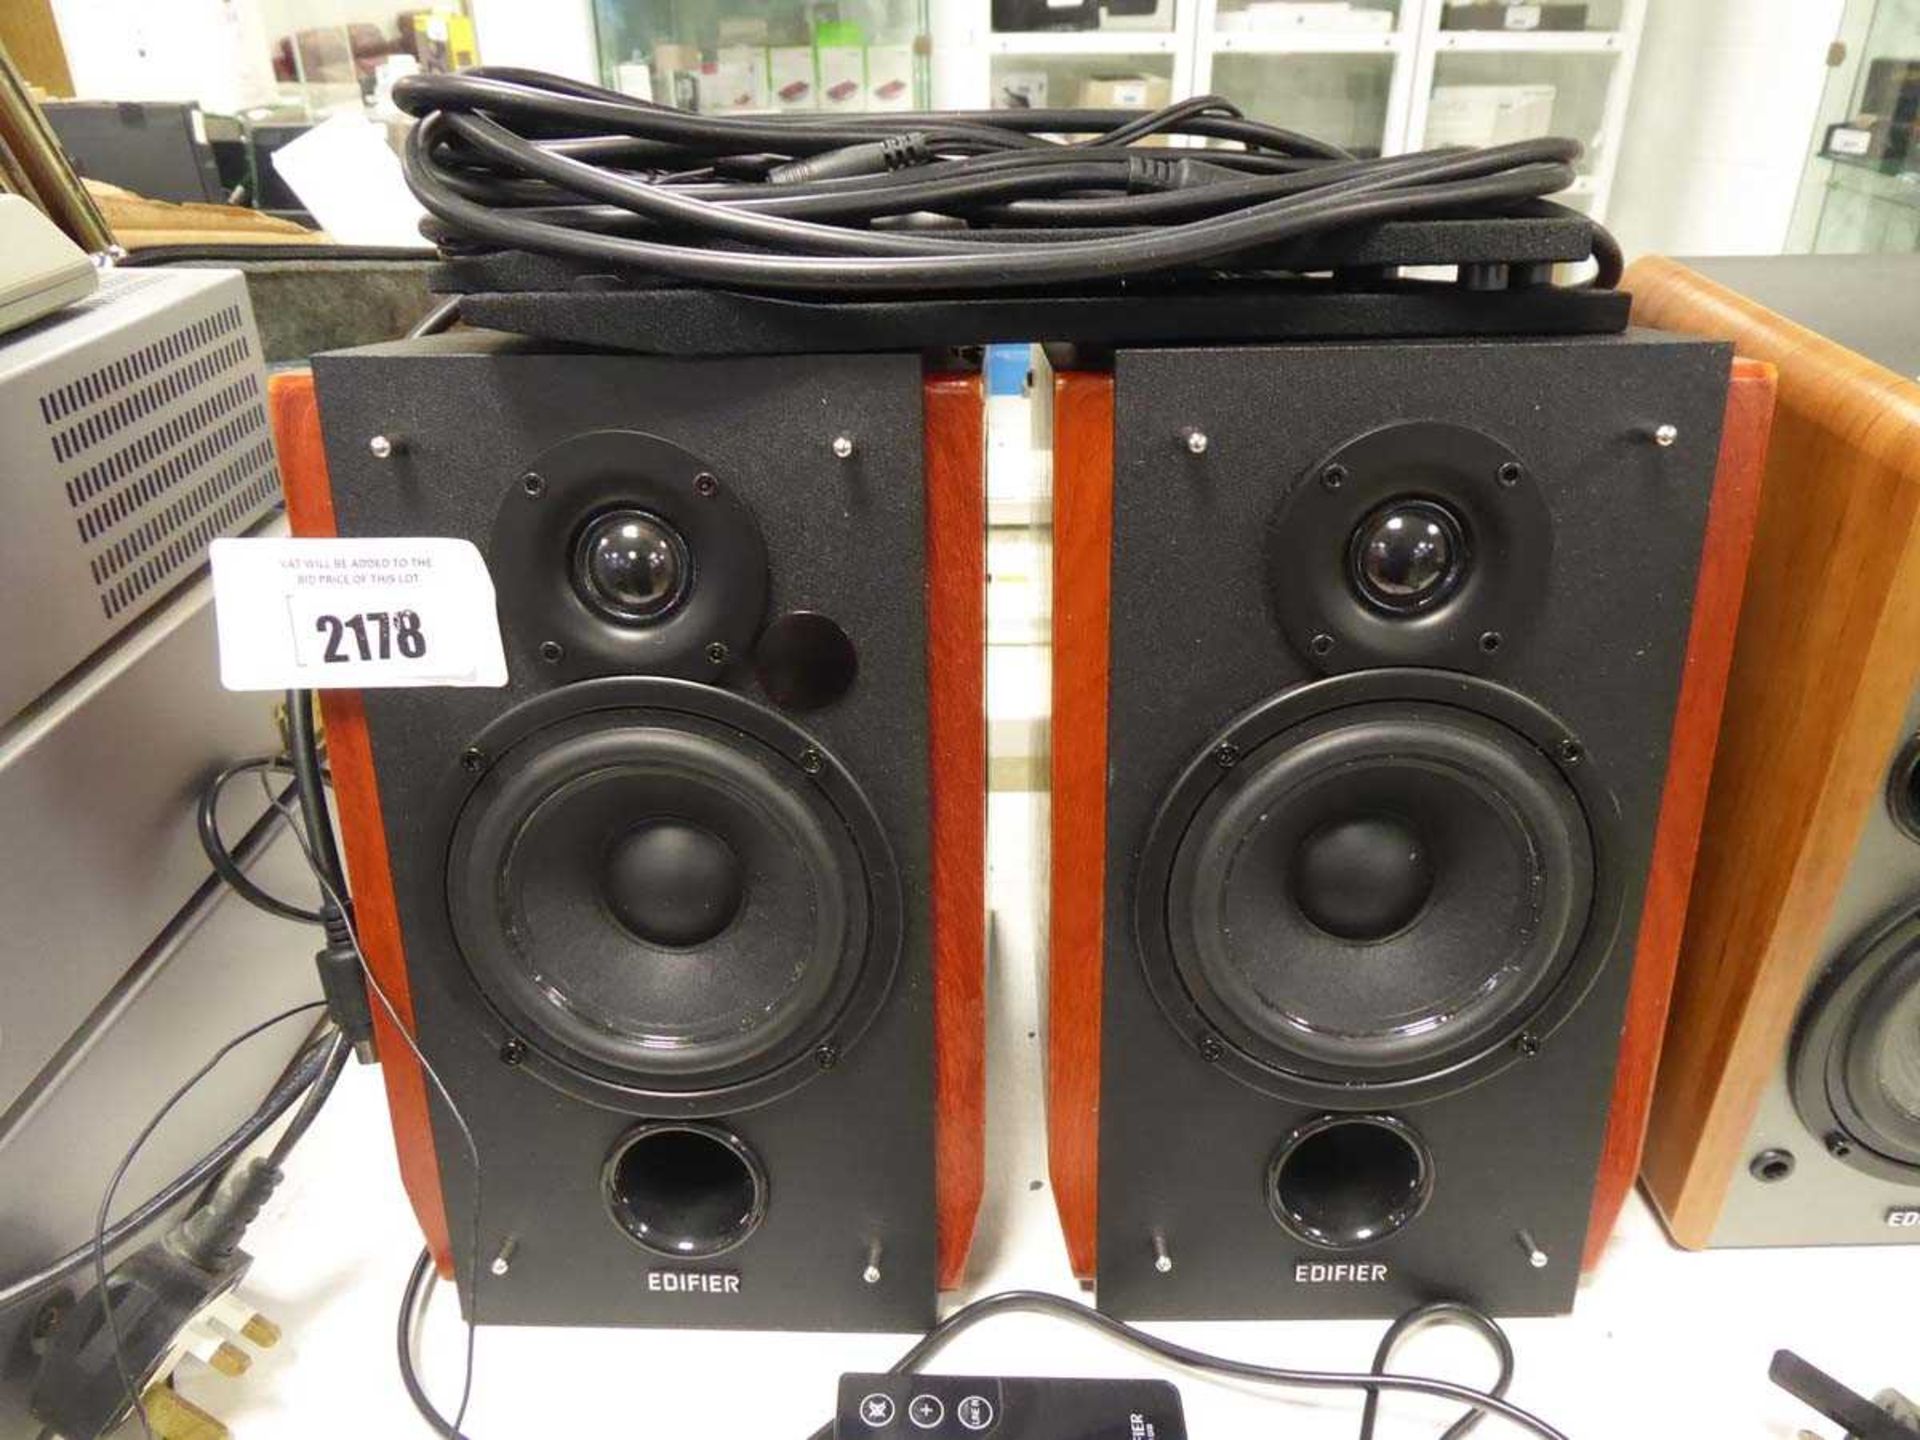 +VAT 2 Edifier powered speakers